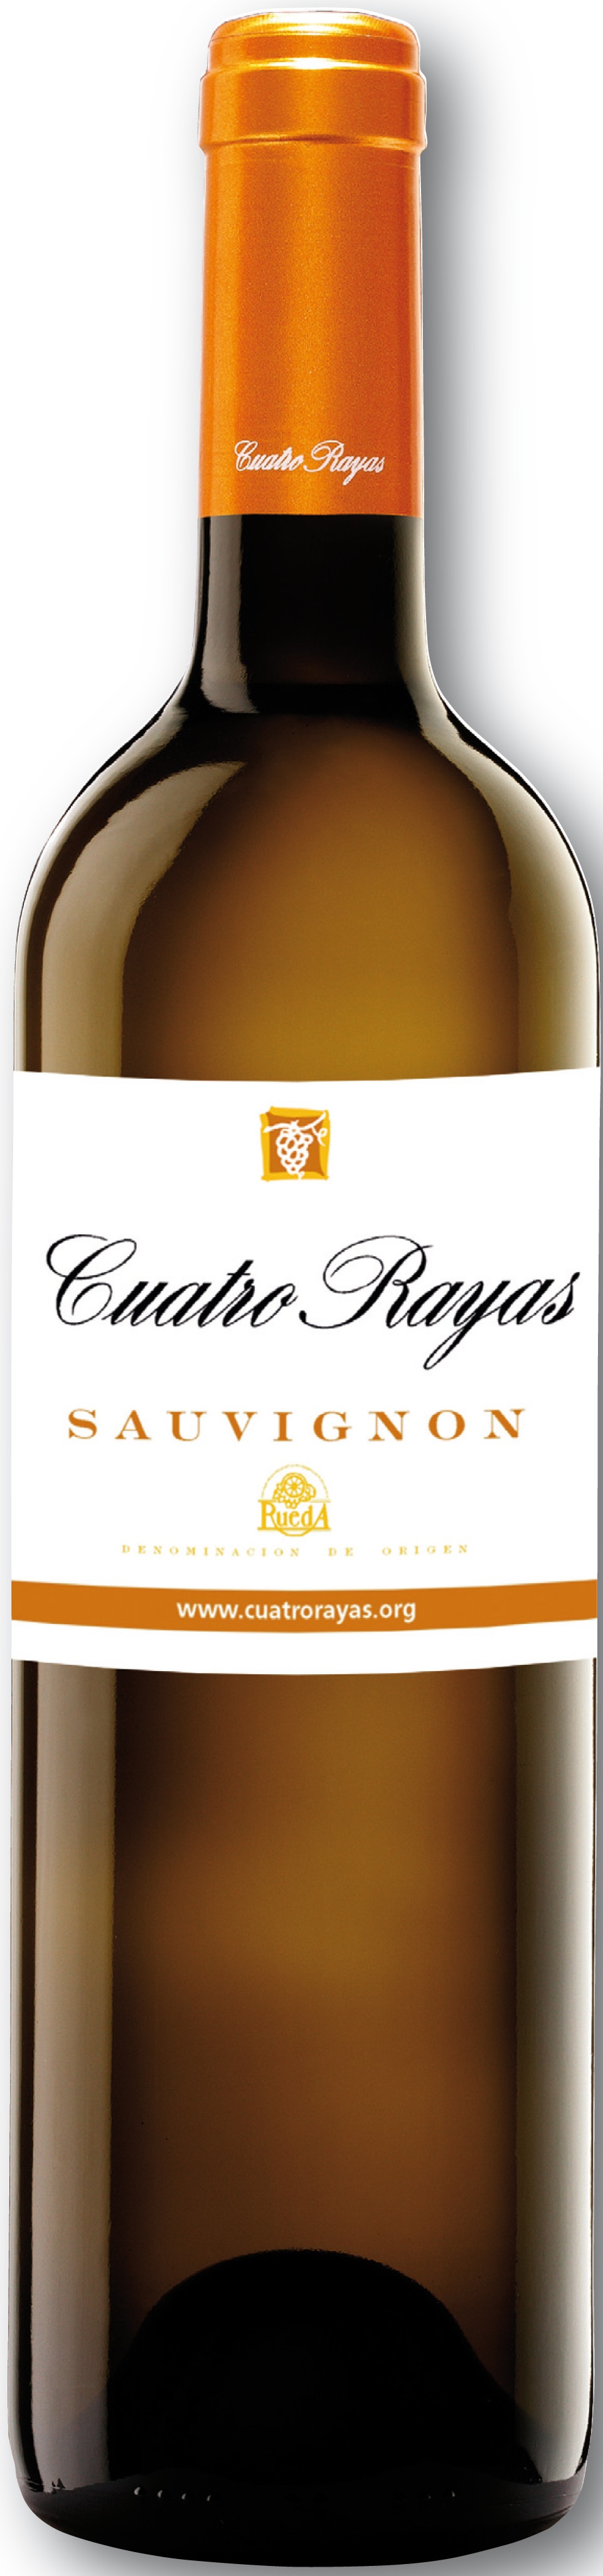 Image of Wine bottle Cuatro Rayas Sauvignon